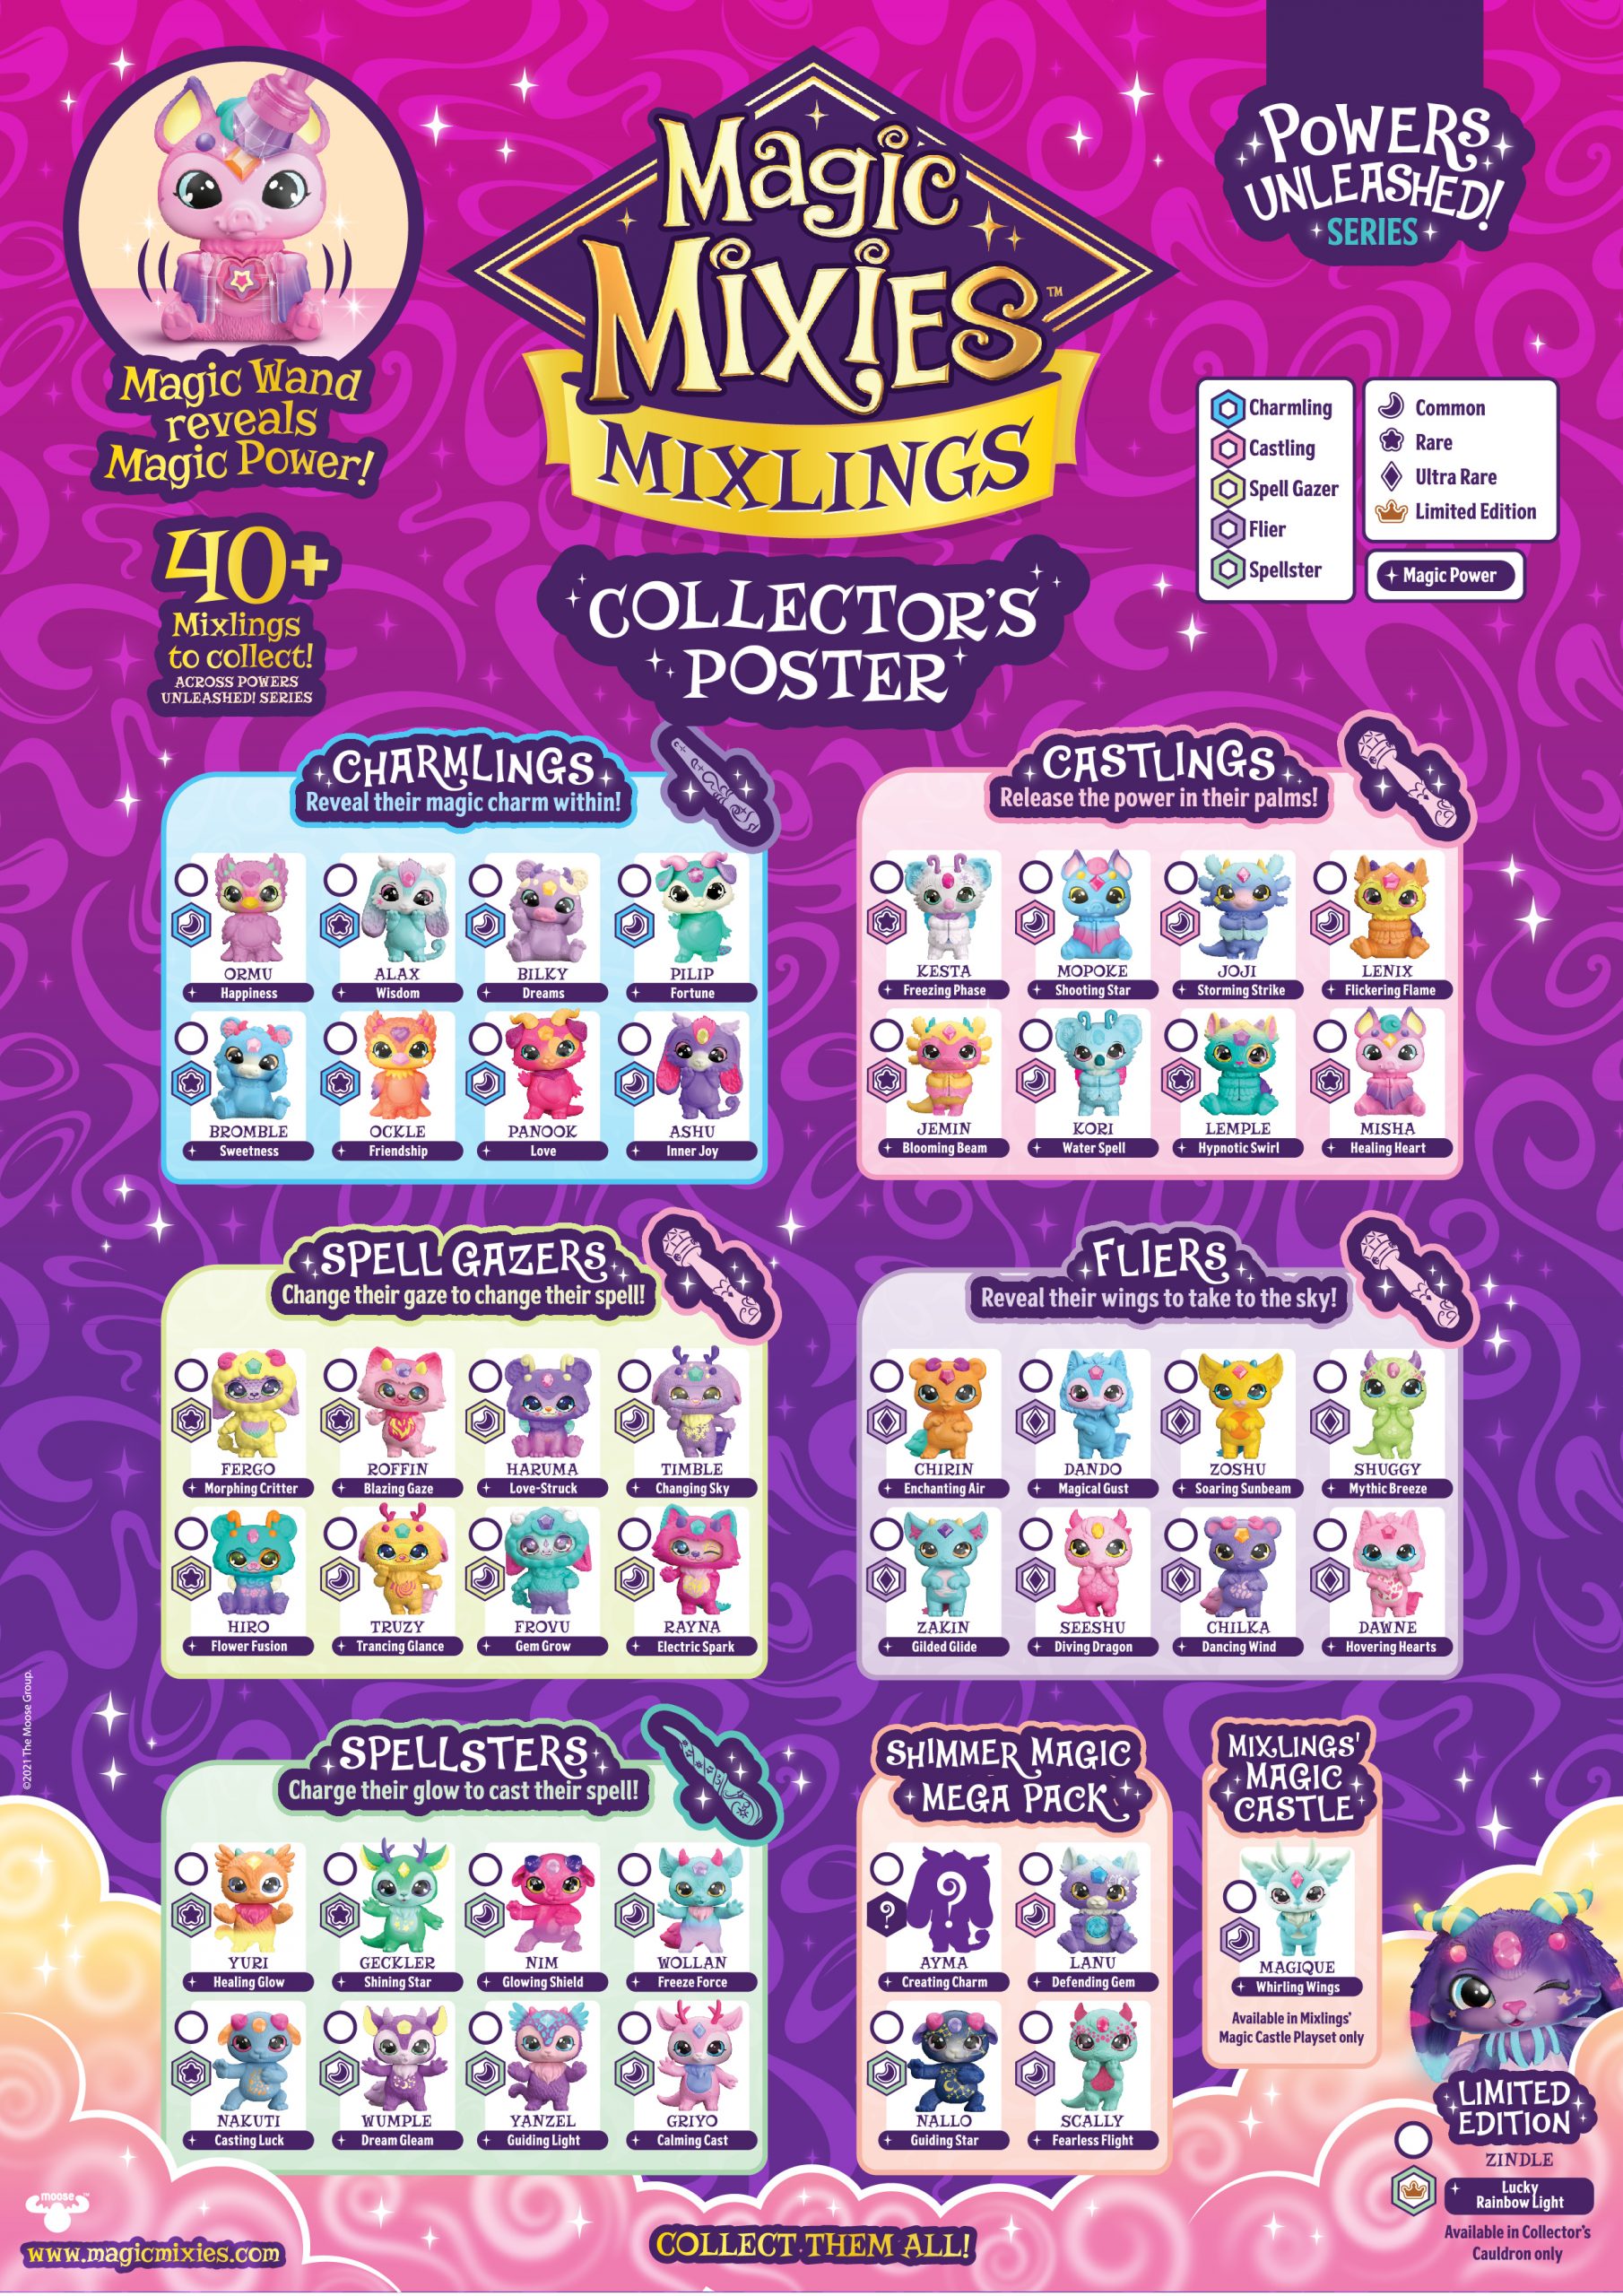 Magic Mixies Mixlings Brand Page - Moose Toys